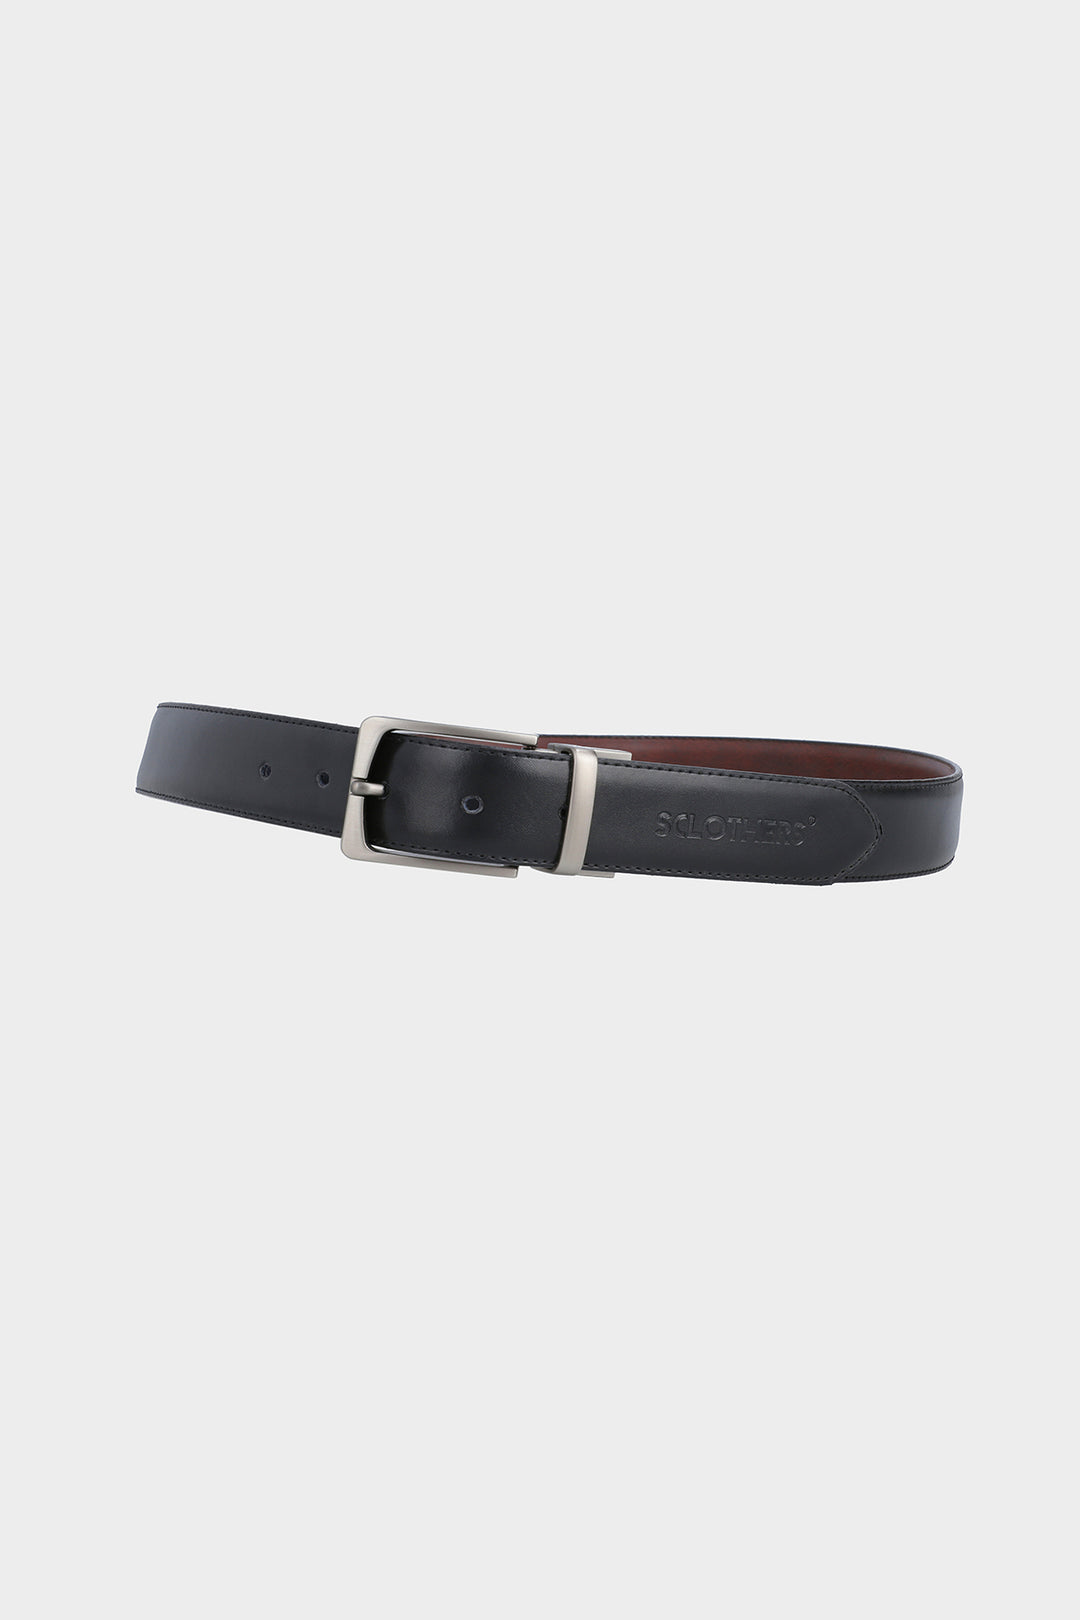 Reversible Black Leather Belt - W21 - MB0004R